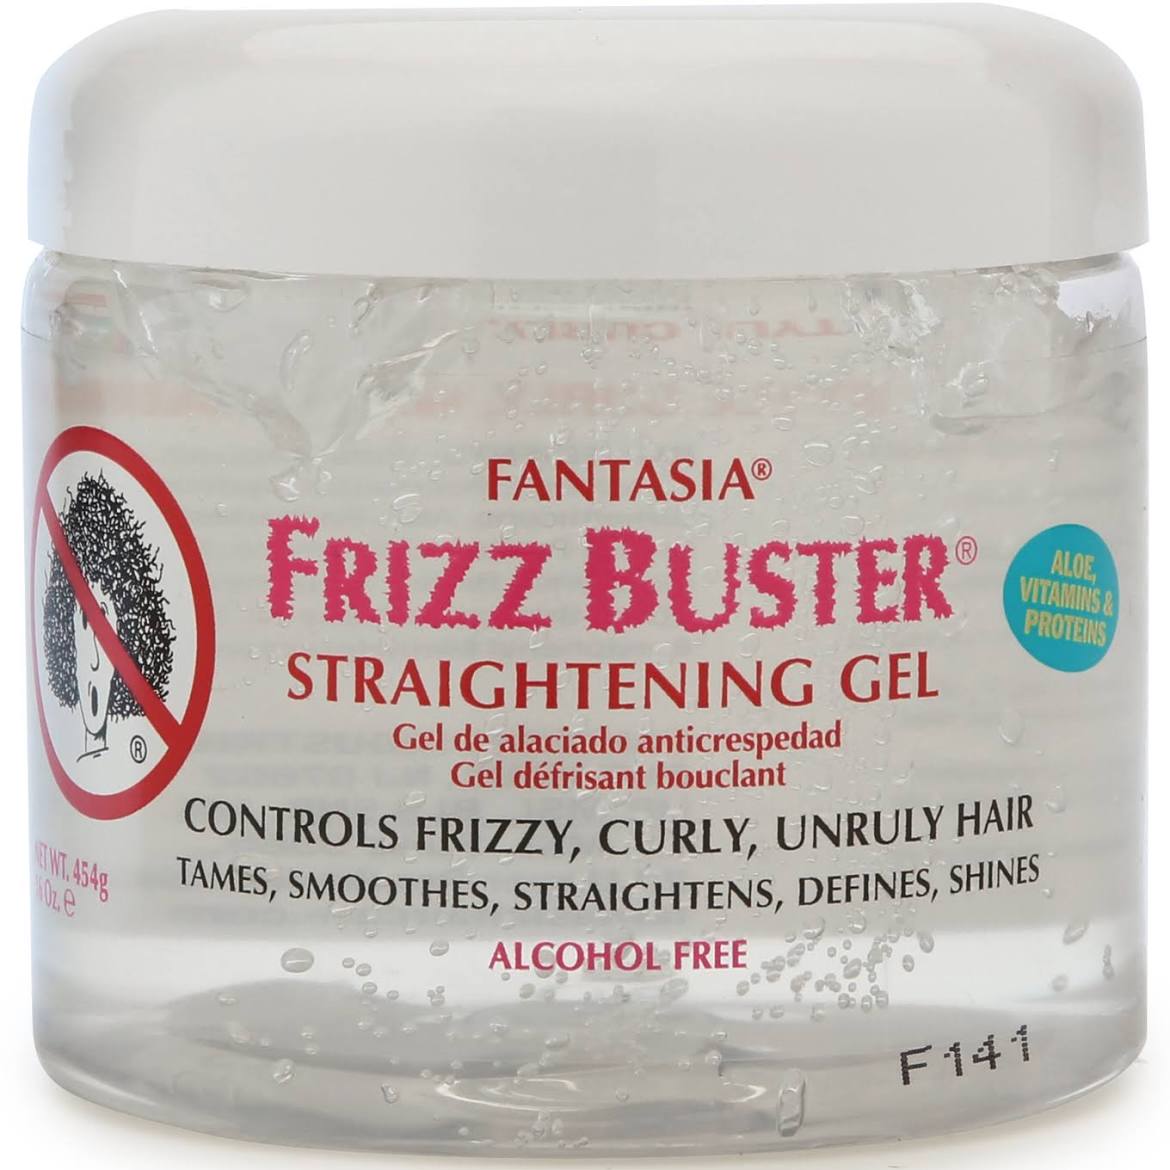 Fantasia frizz buster straightening gel